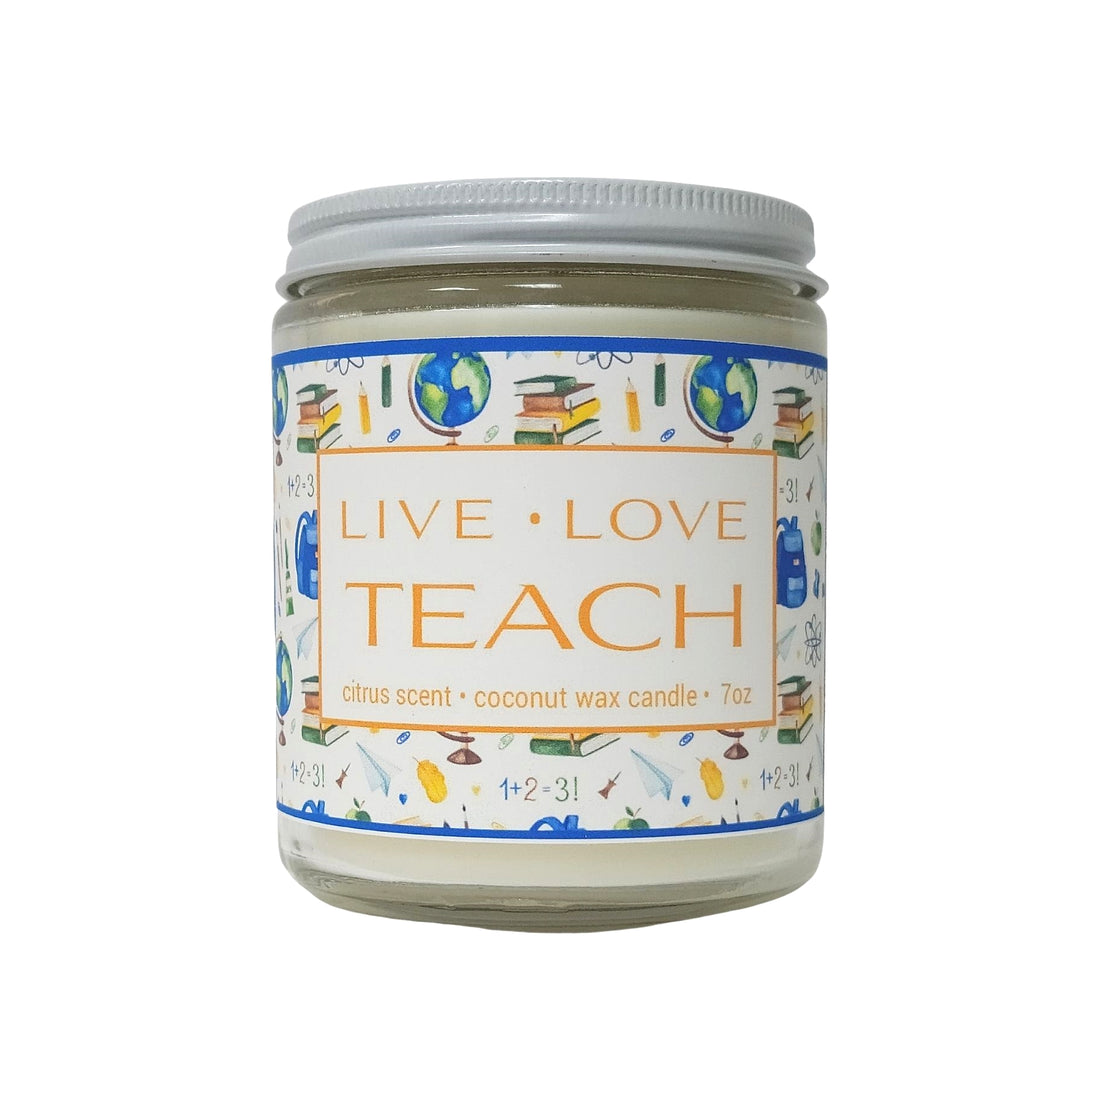 LIVE LOVE TEACH 7oz Candle Citrus Coconut Wax Candle